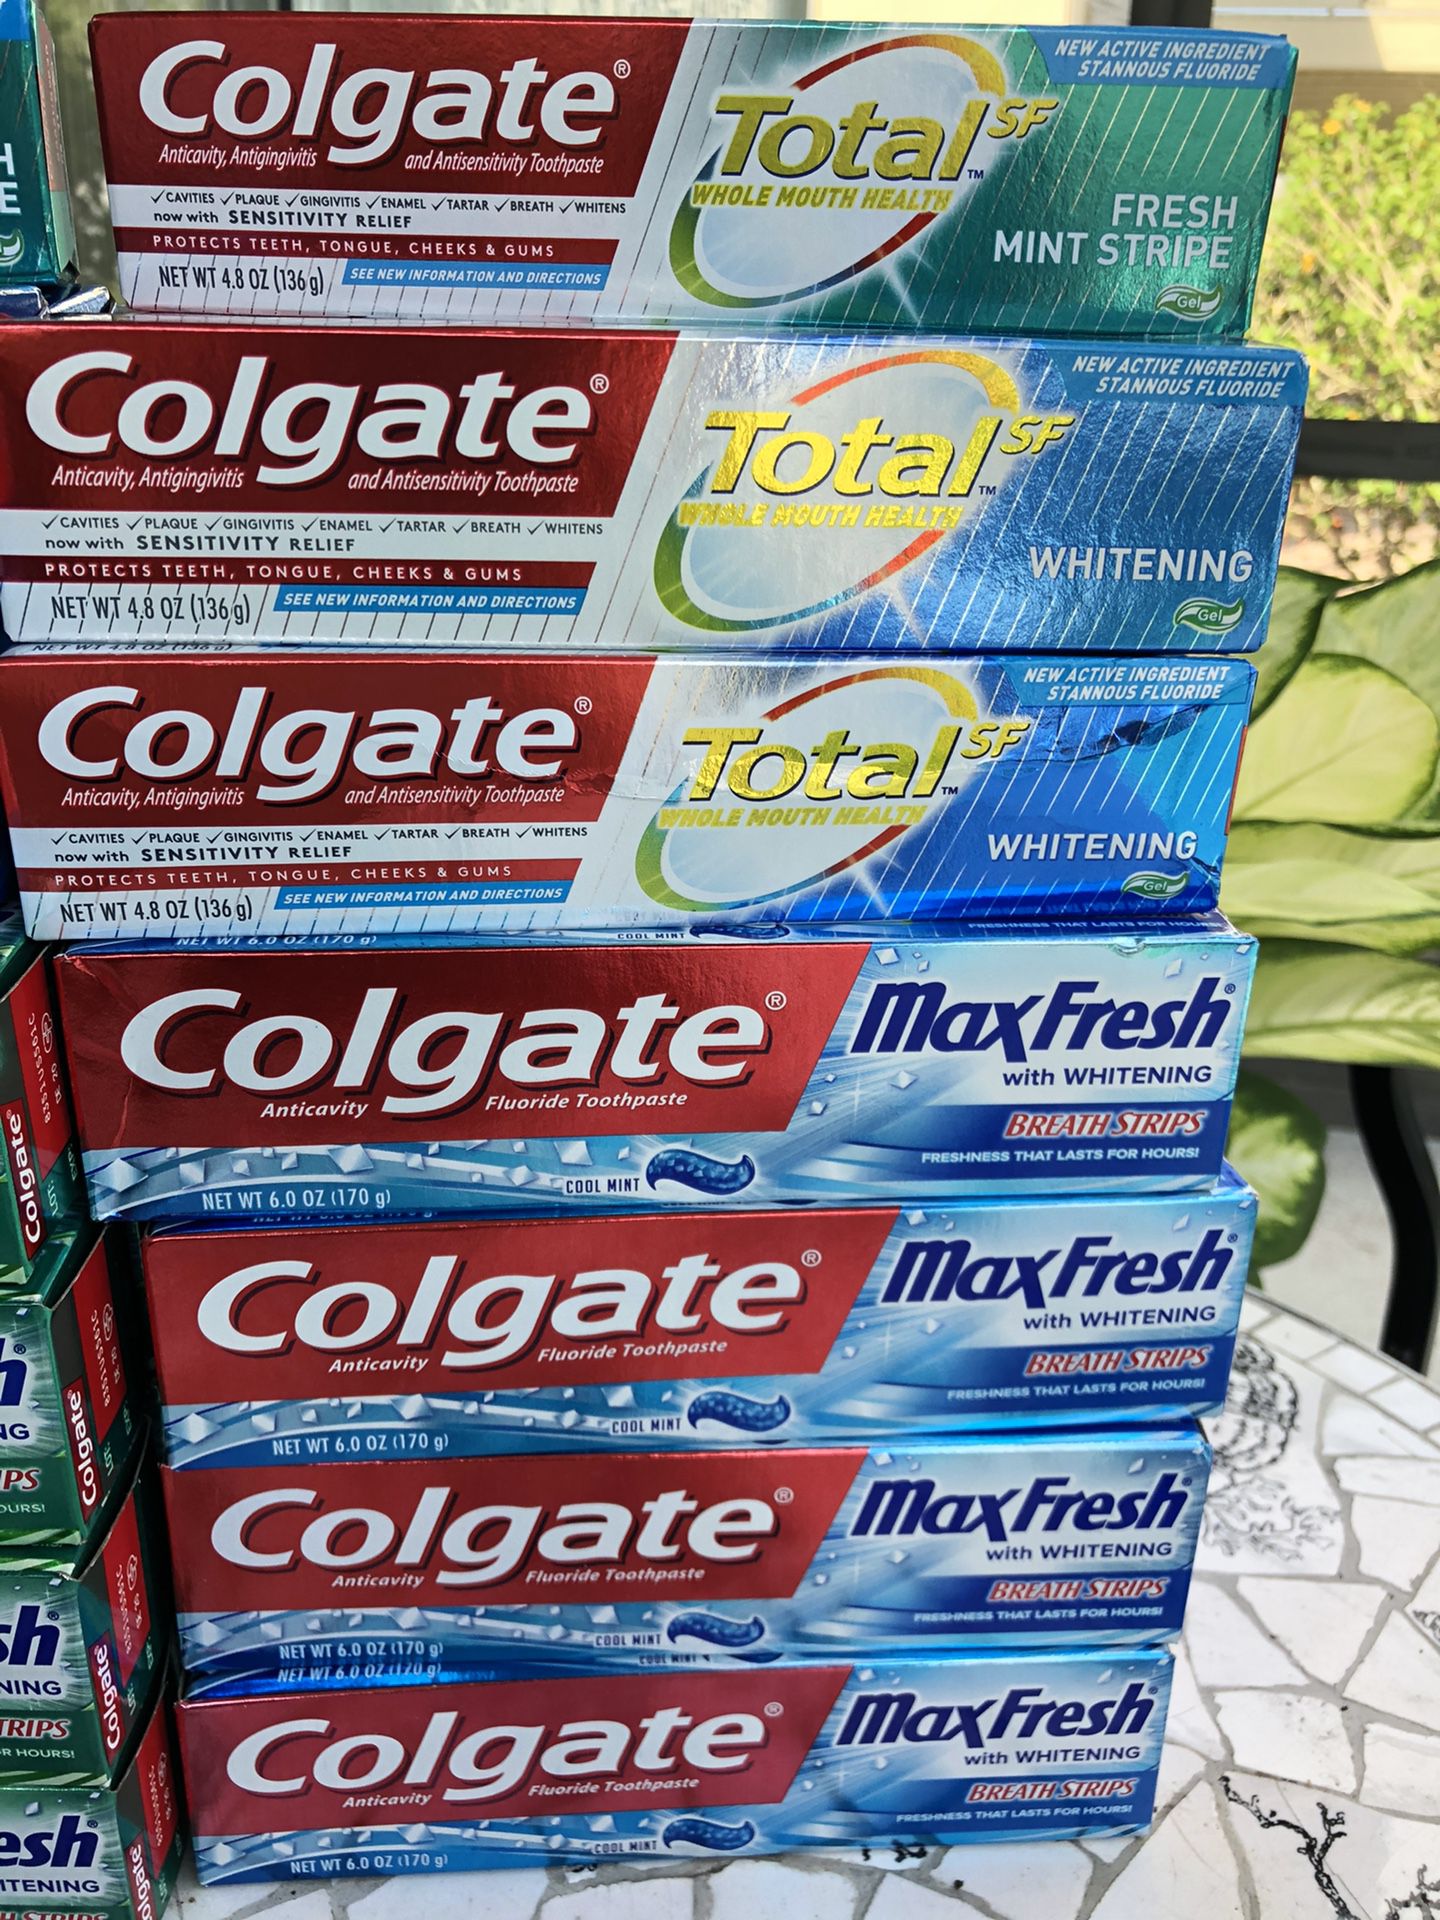 New Colgate toothpastes